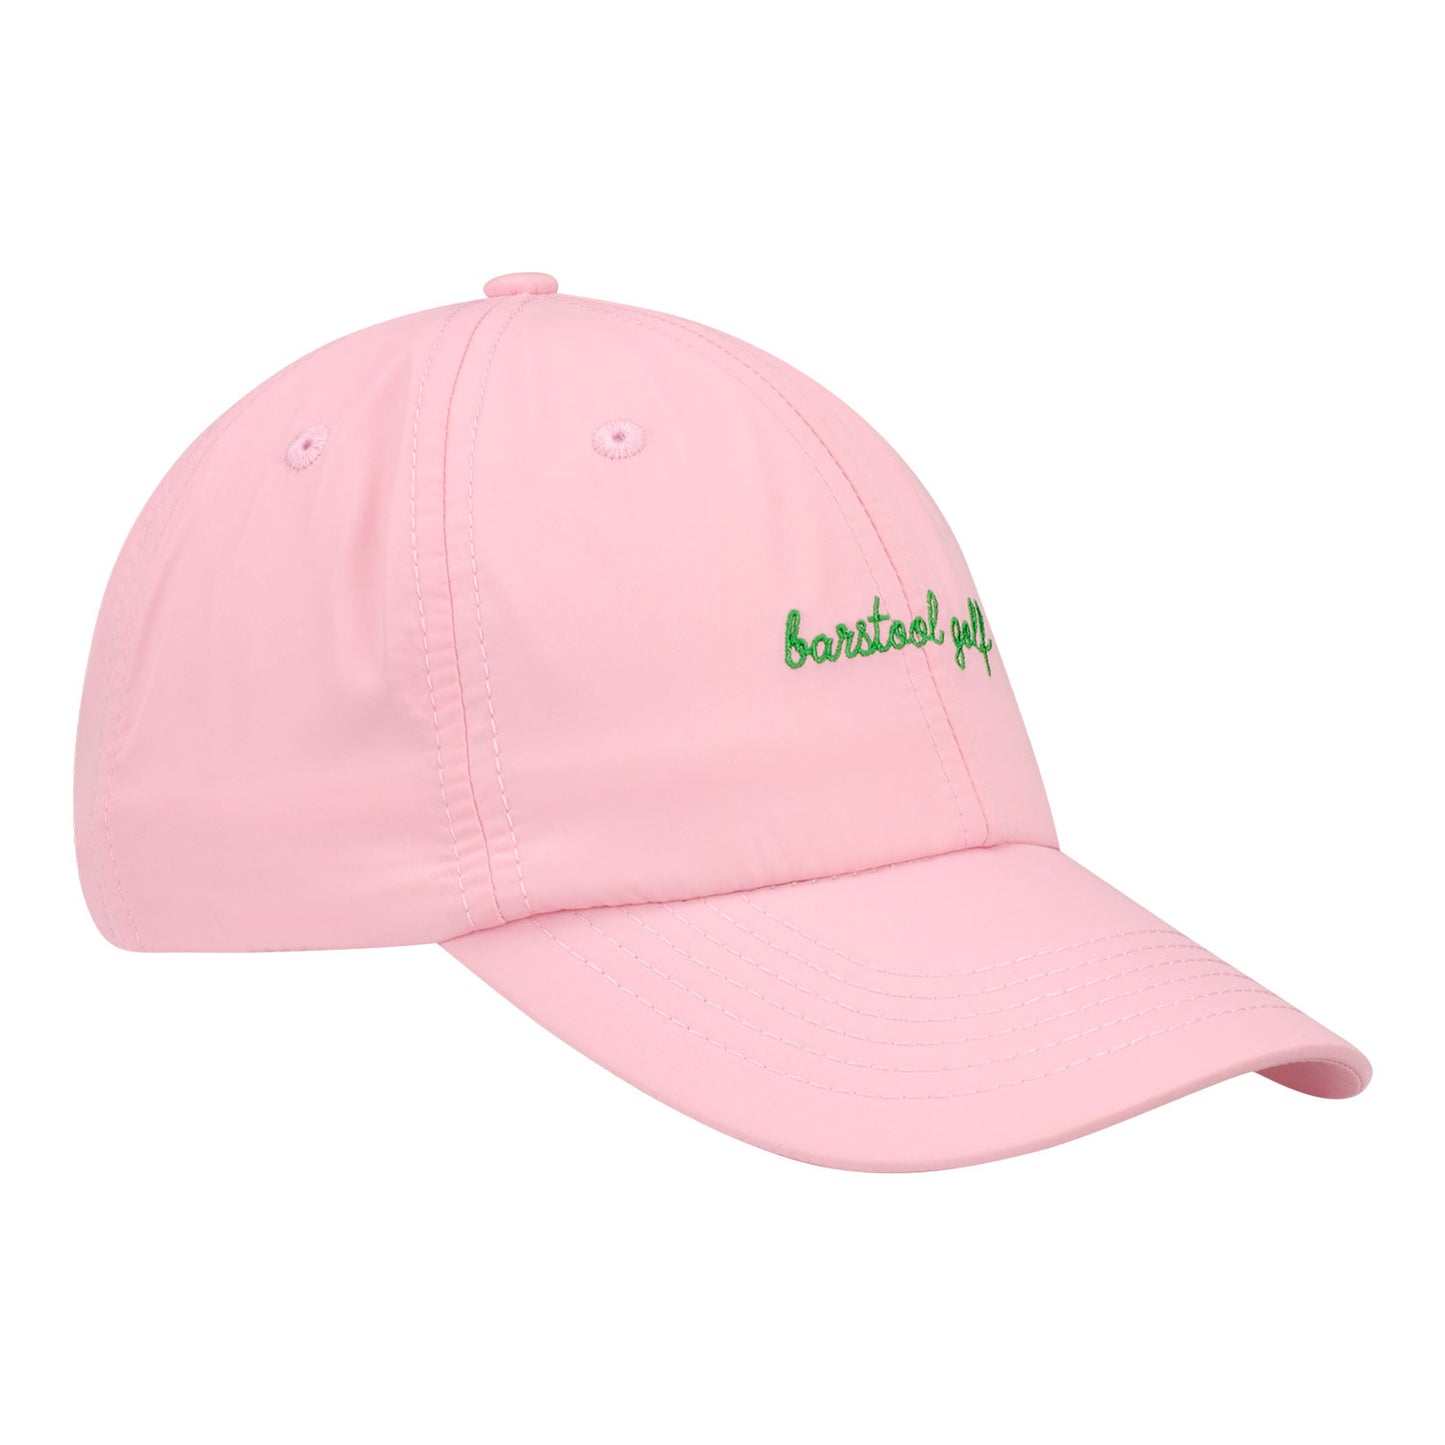 Barstool Golf LPGA Women's Hat - Angled Right Side View